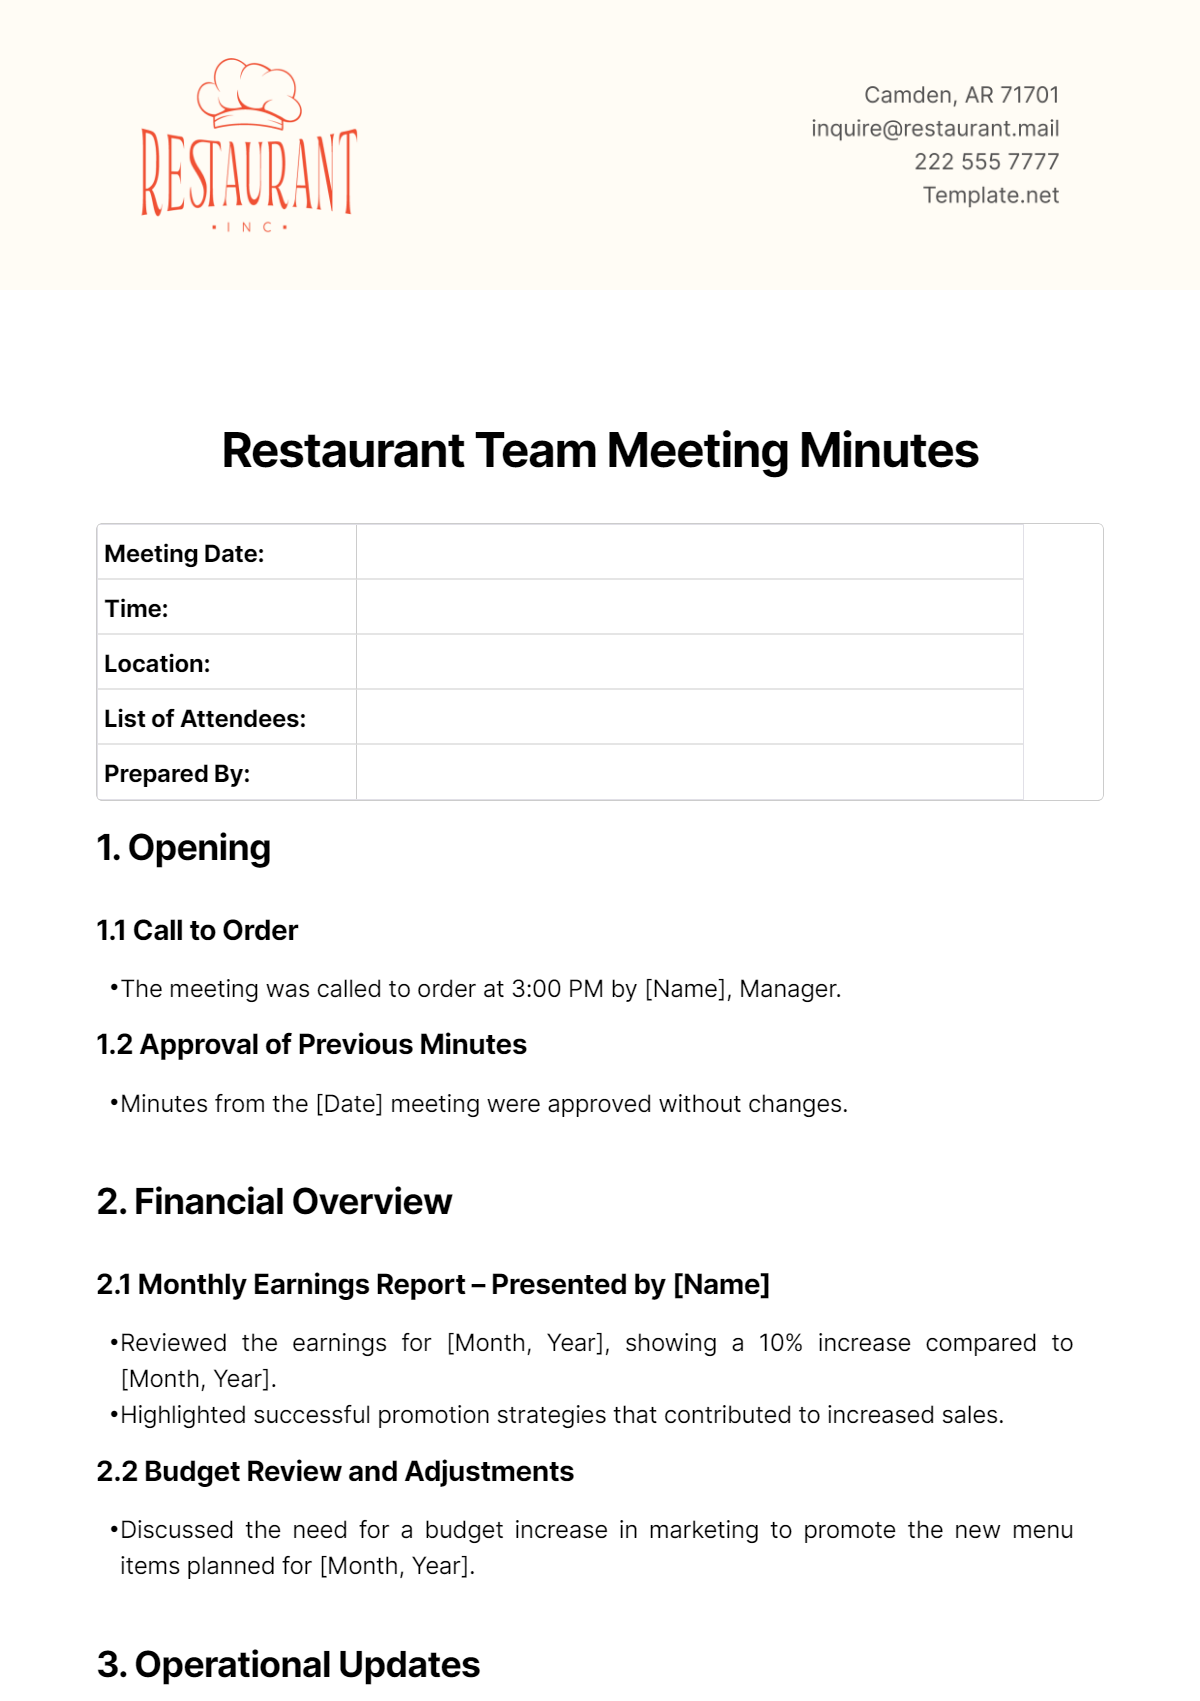 Restaurant Team Meeting Minutes Template